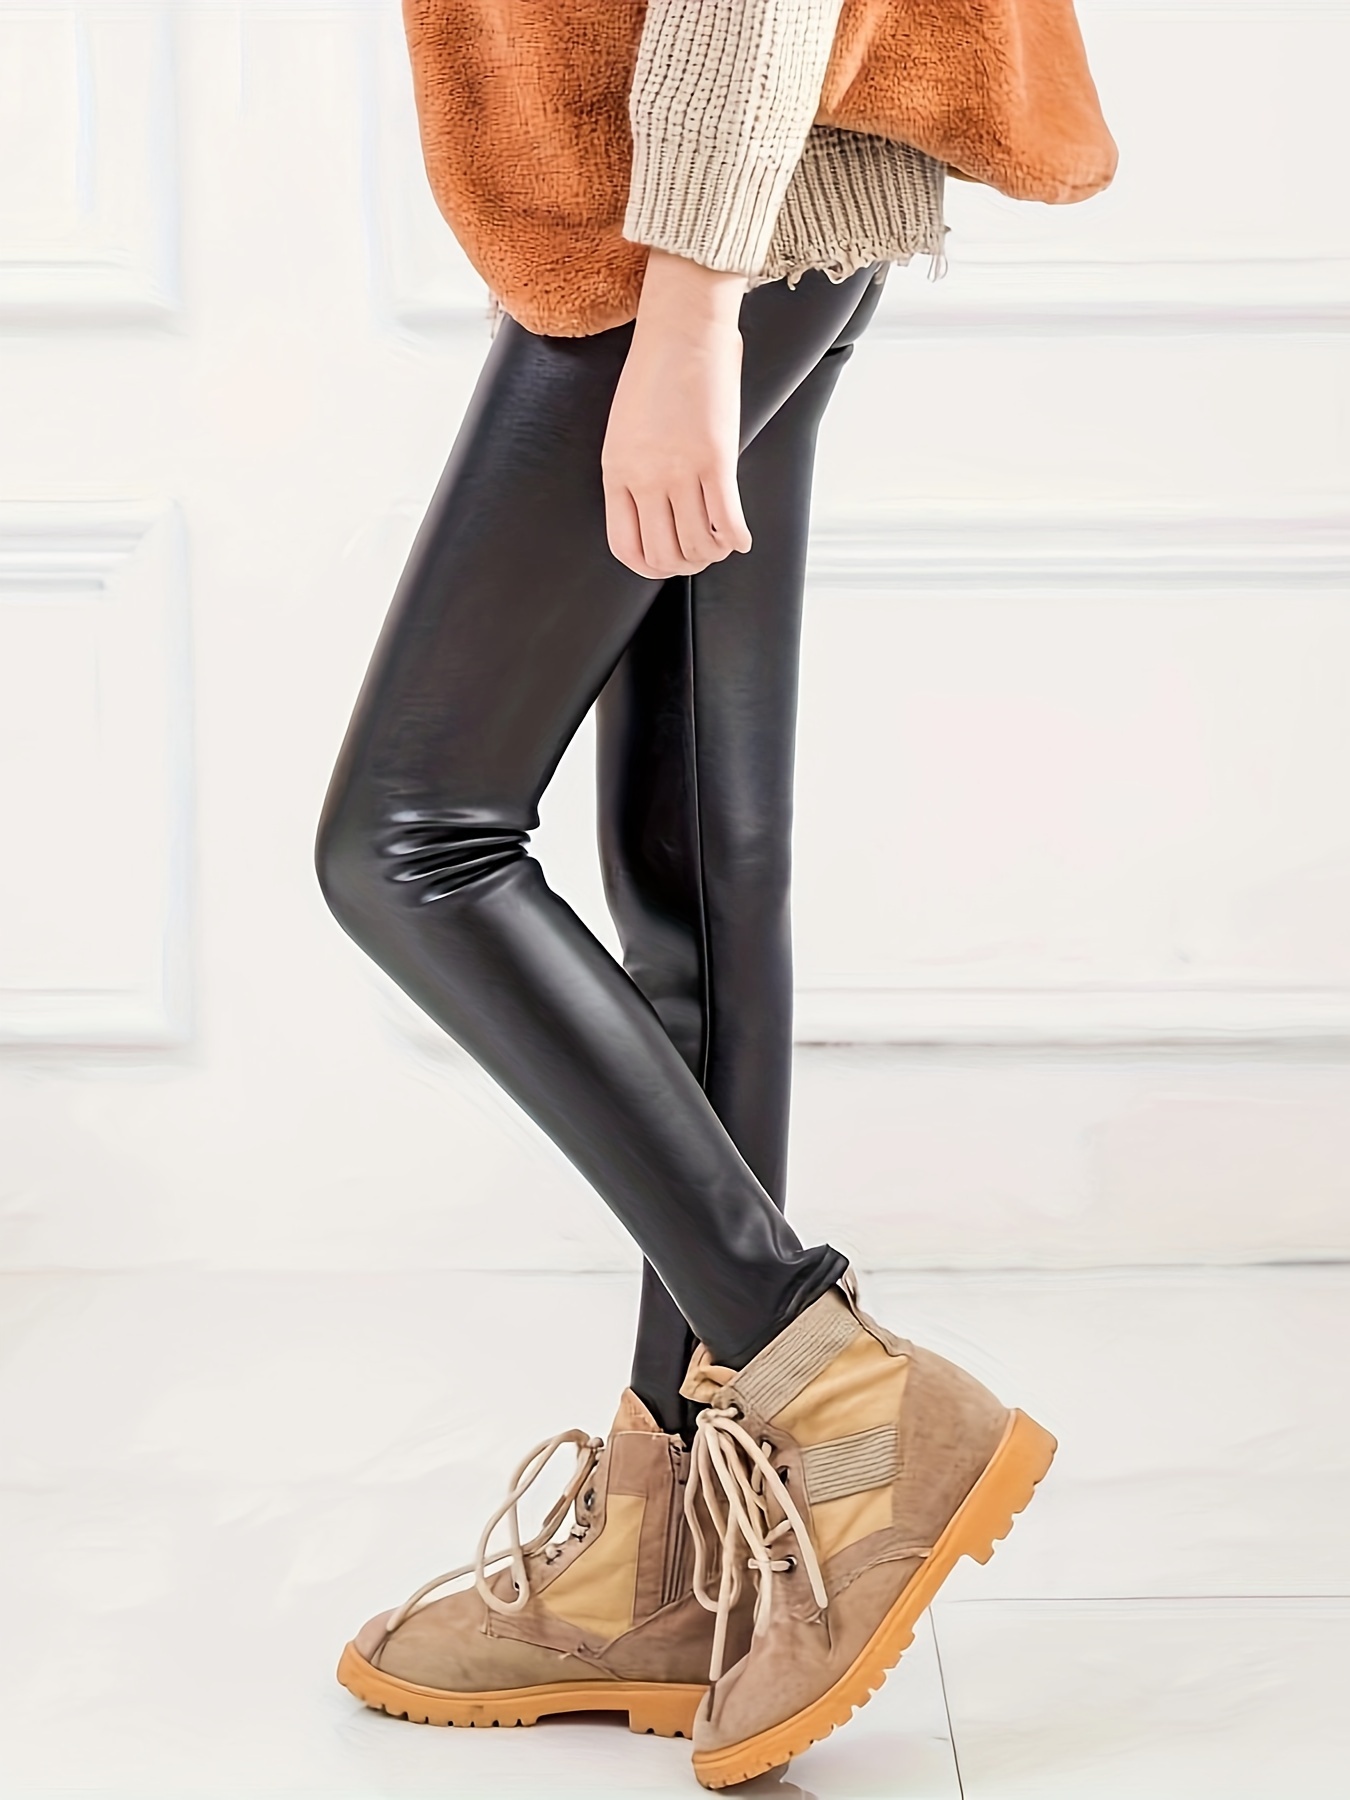 Kids Girl PU Leather Leggings Pants Winter Thermal Fleece Lined